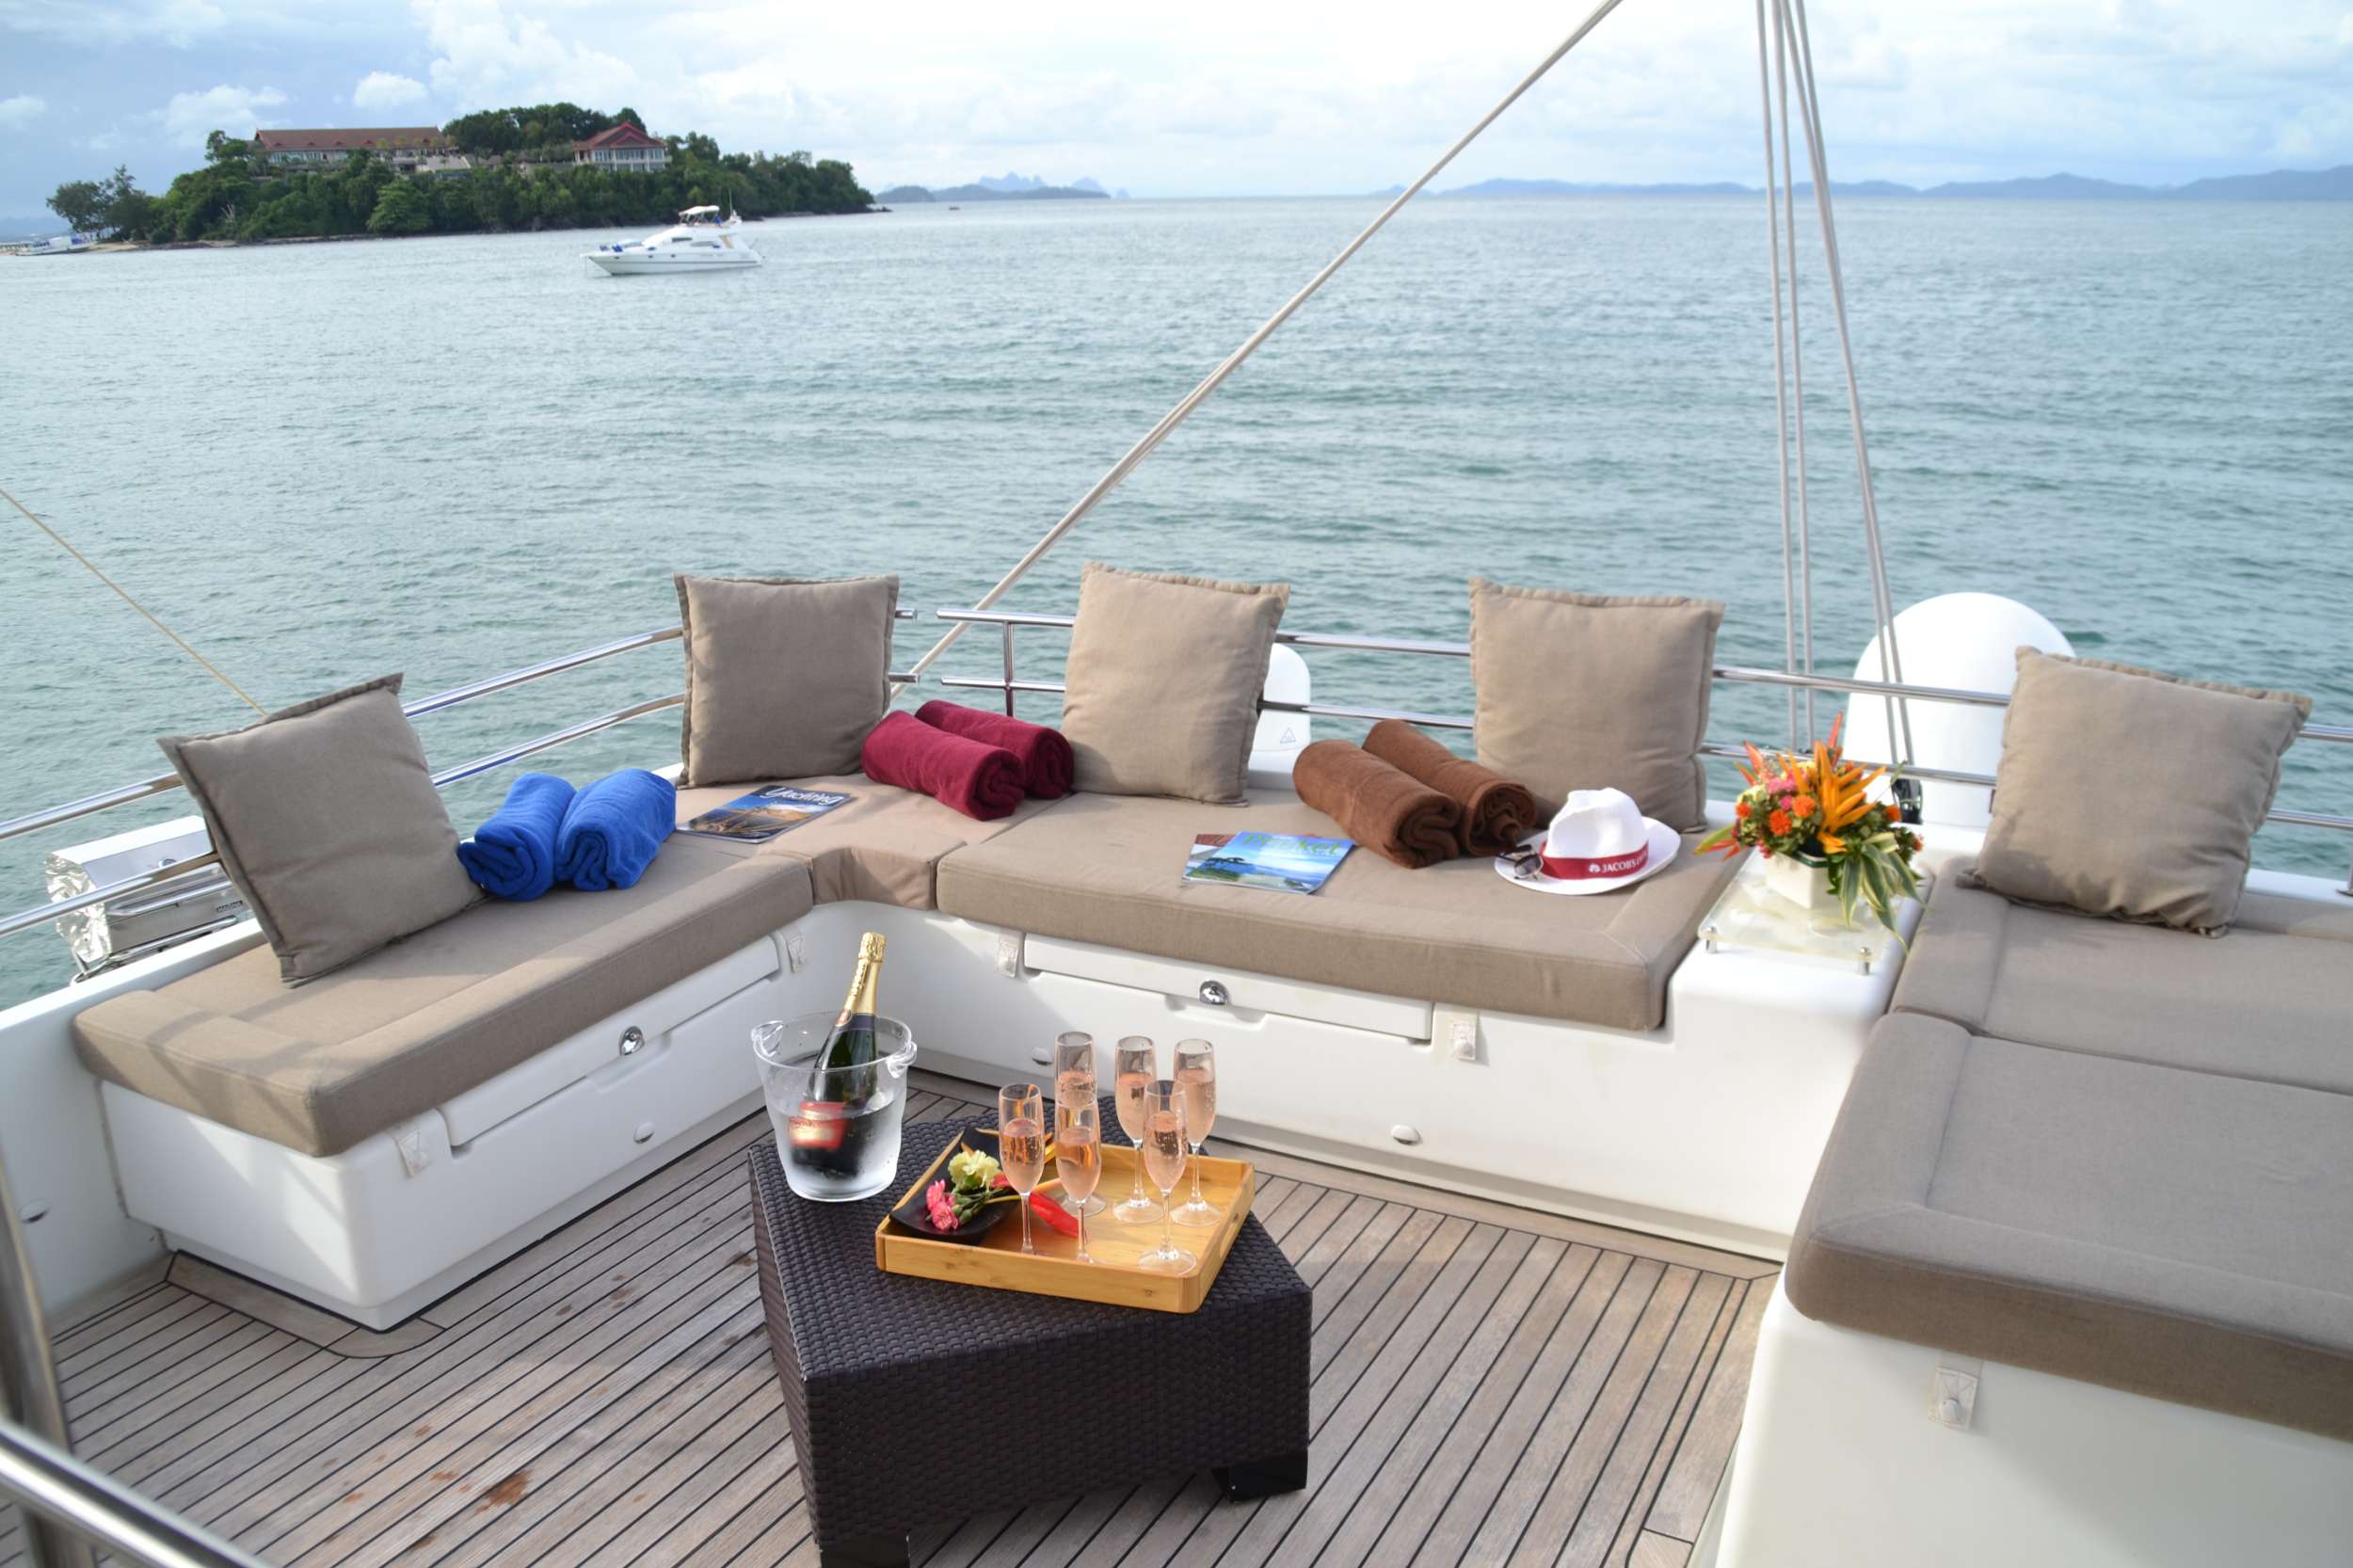 00SEVEN - Yacht Charter Koh Samui & Boat hire in SE Asia 5